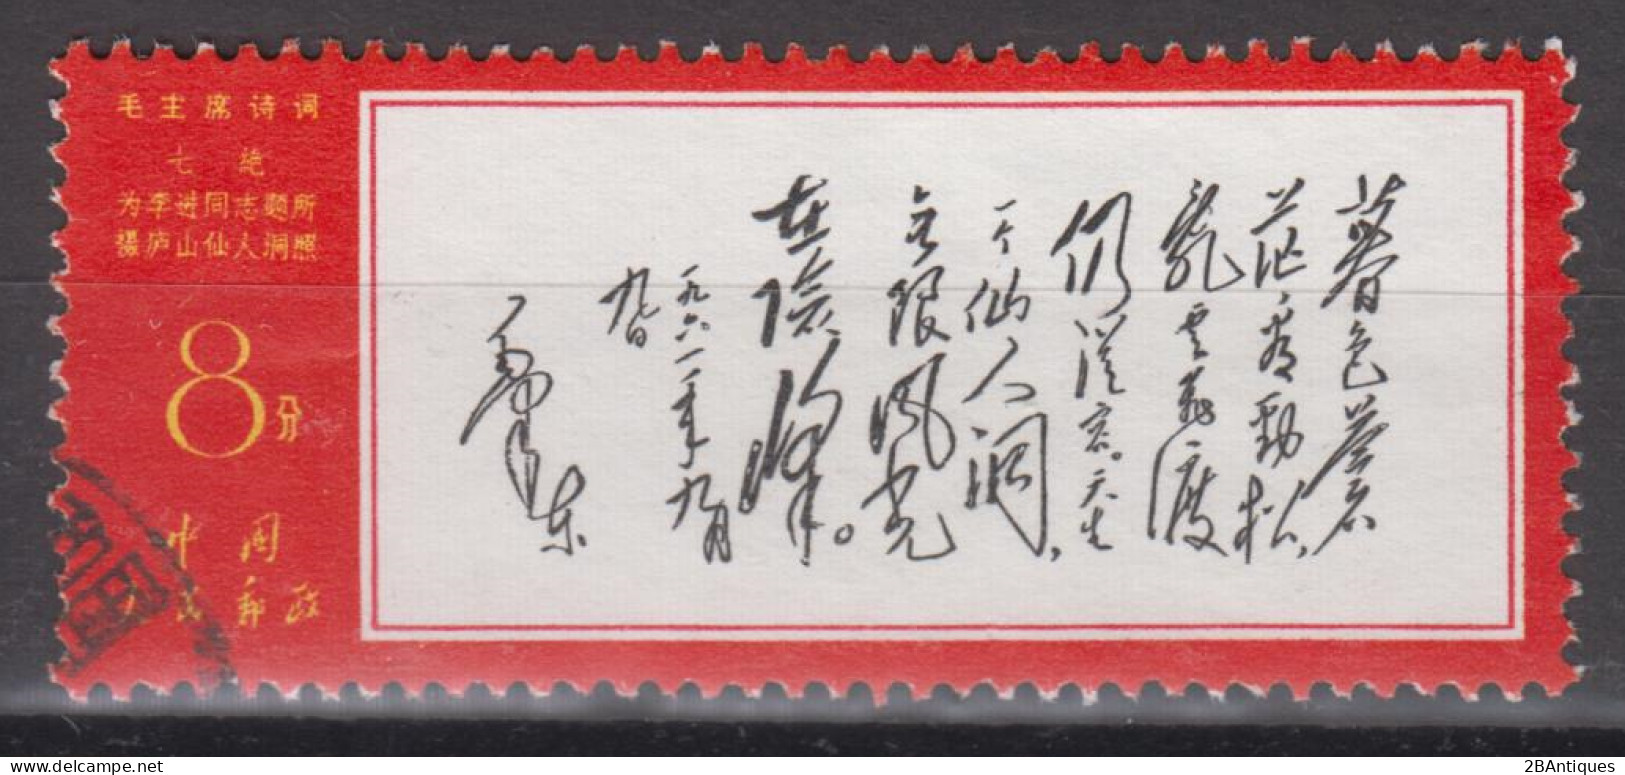 PR CHINA 1967 - Poems Of Mao Tse-tung - Gebraucht